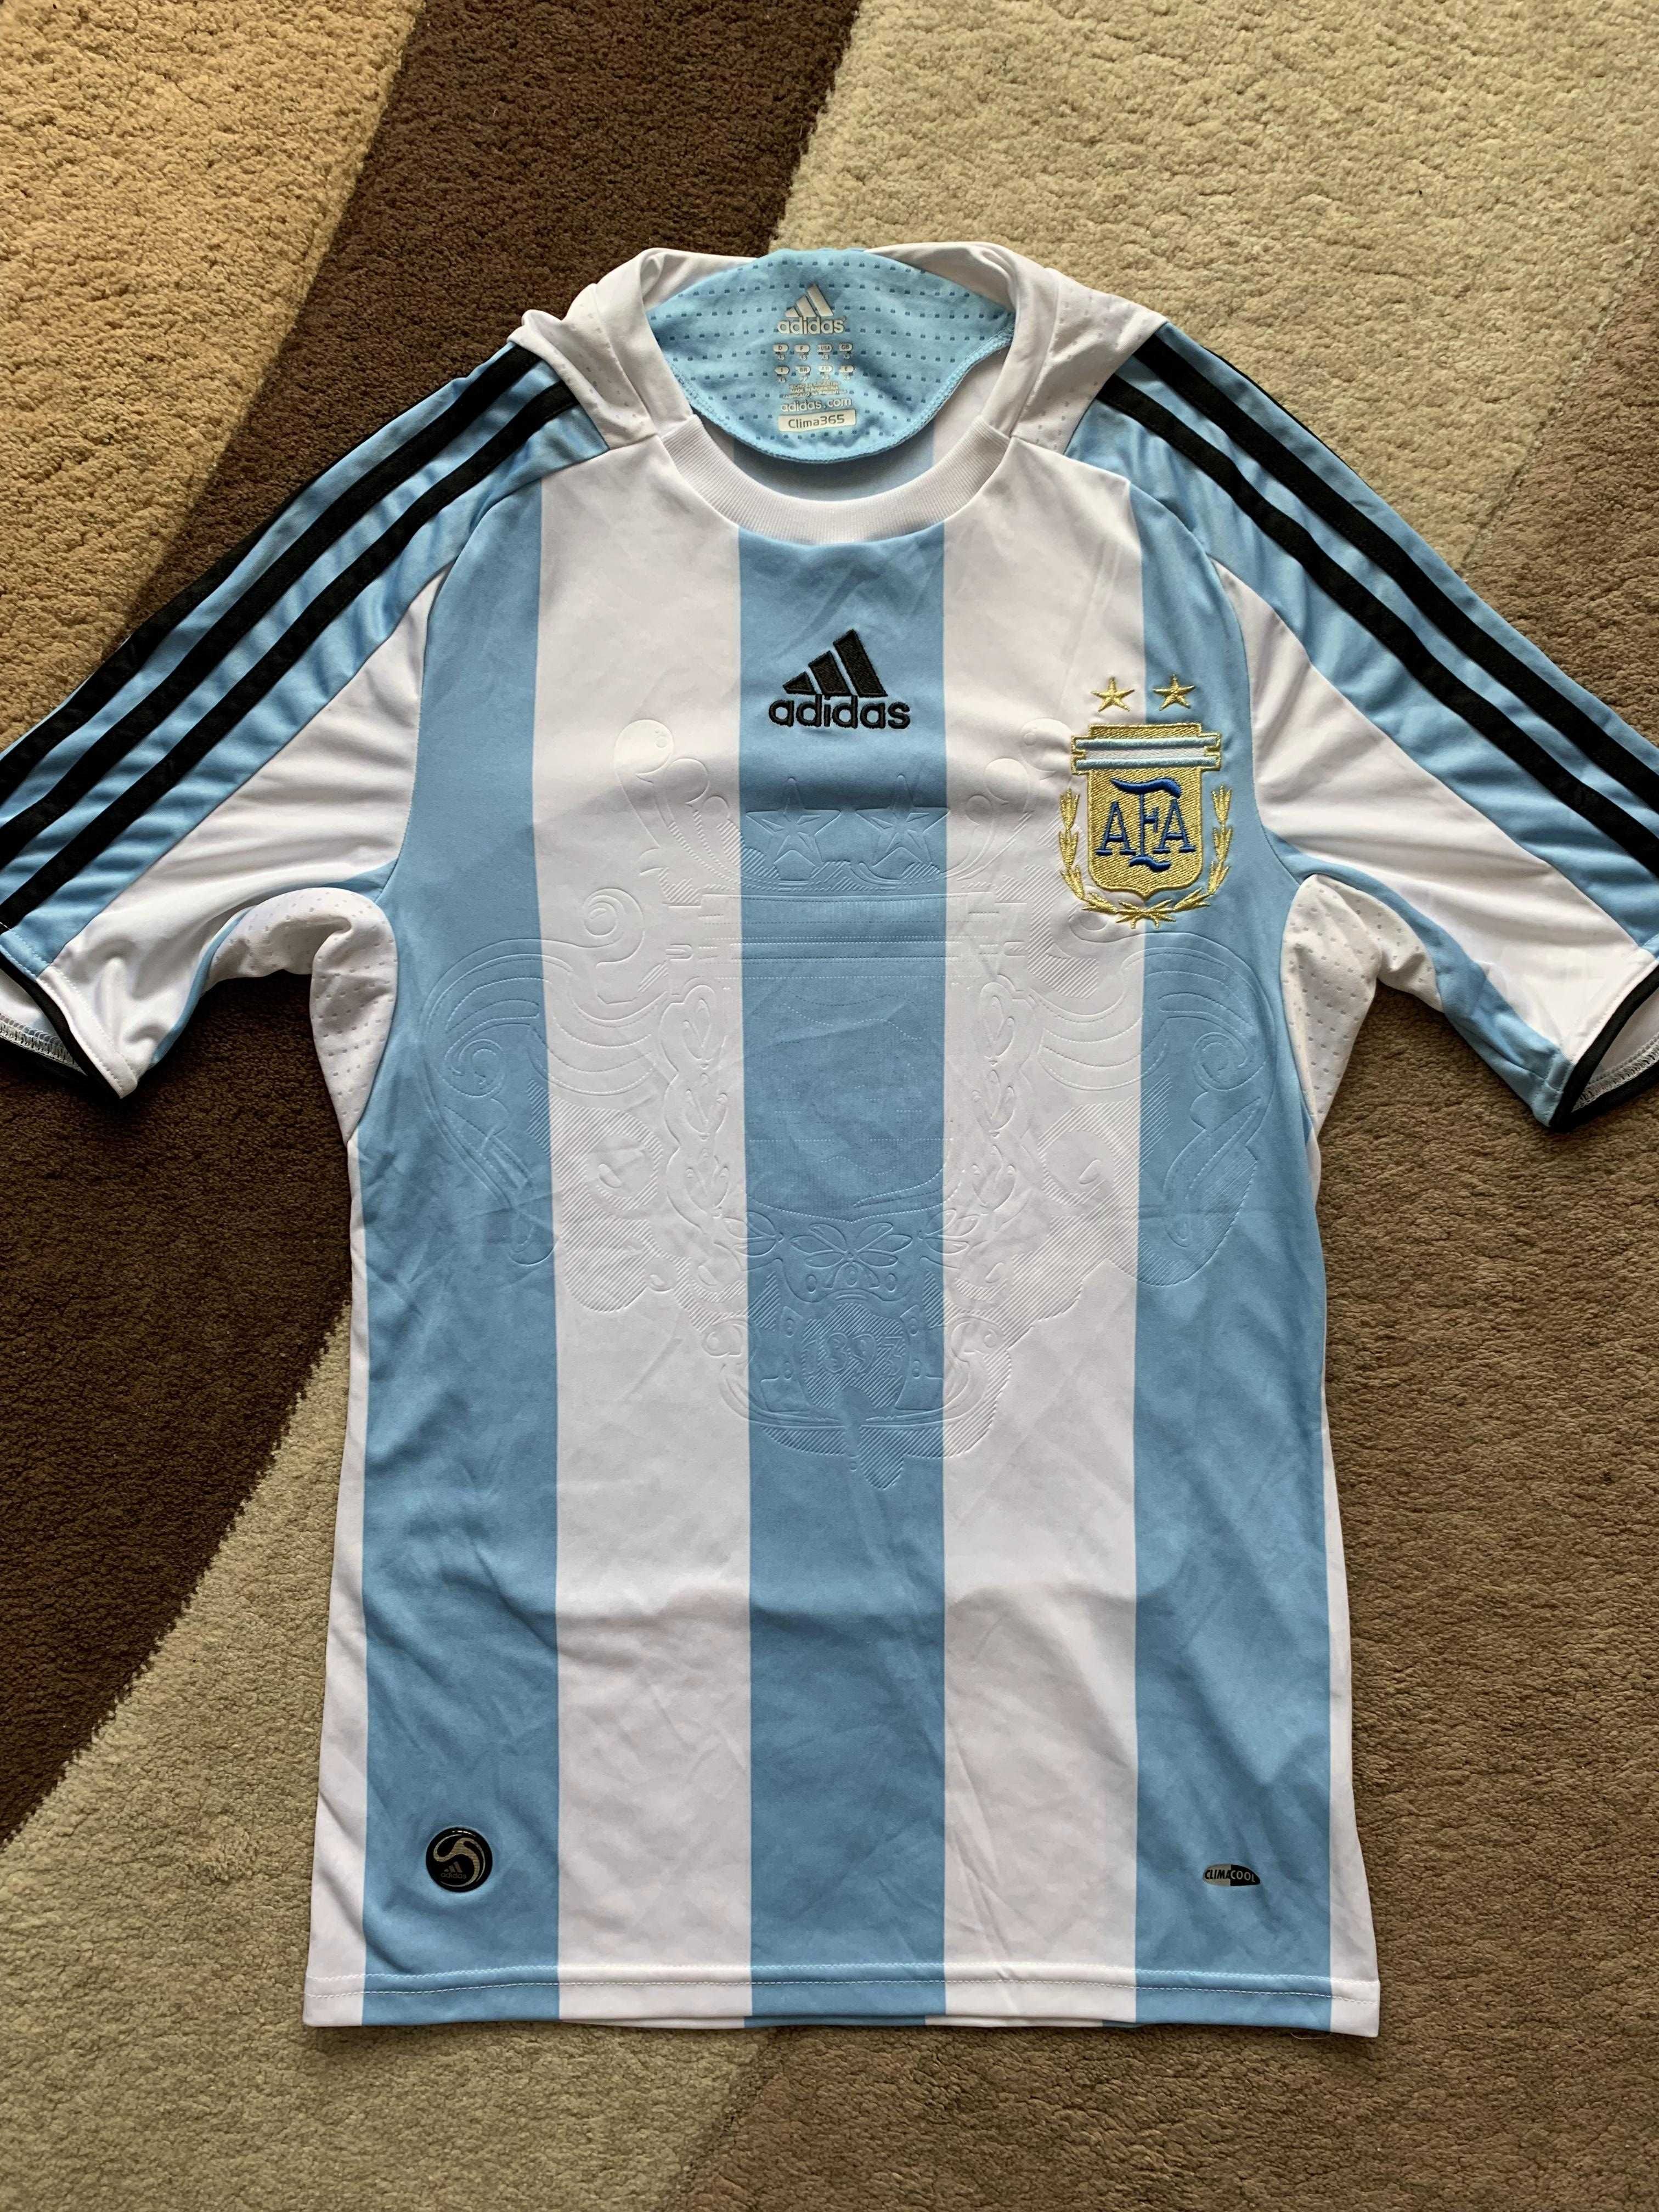 Tricou Argentina World Cup 2008 Fotbal BlokeCore Adidas Messi Maradona